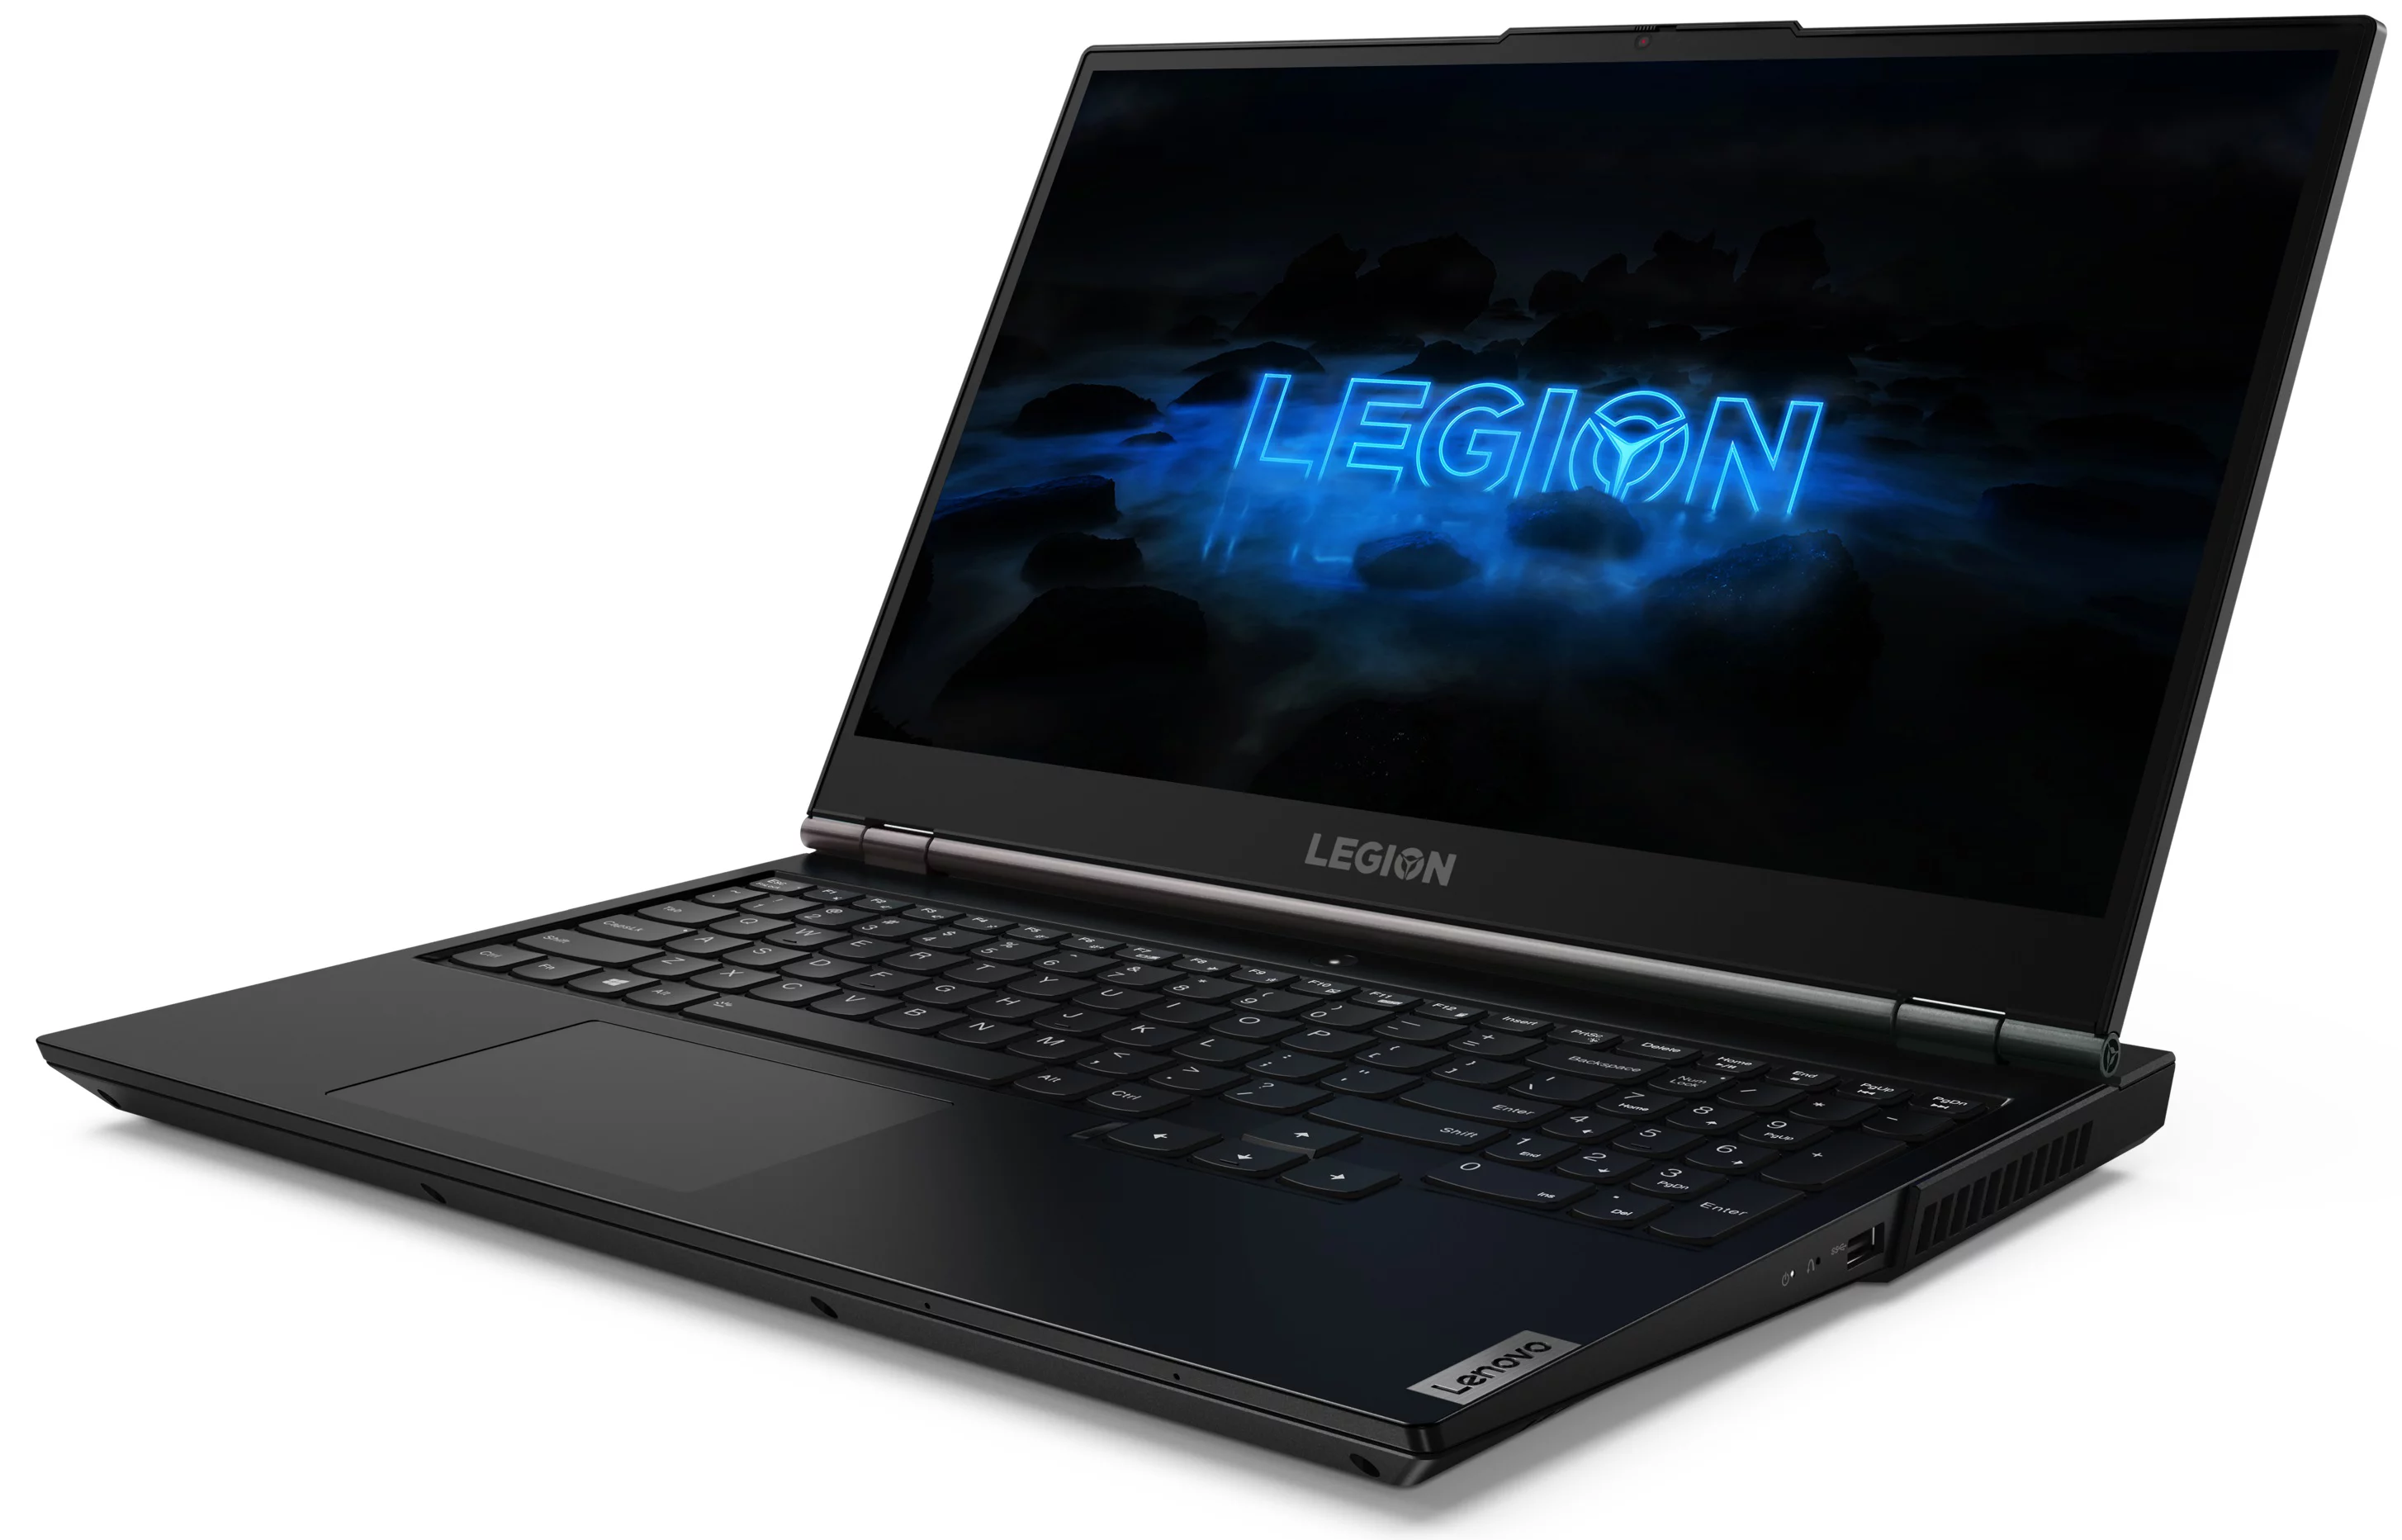 Lenovo Legion 5 15" FHD, Intel Core i7-10750H, NVIDIA GeForce RTX 2060, 16GB RAM, 1TB HDD + 256GB SSD, Phantom Black, Windows 10, 81Y600DBUS